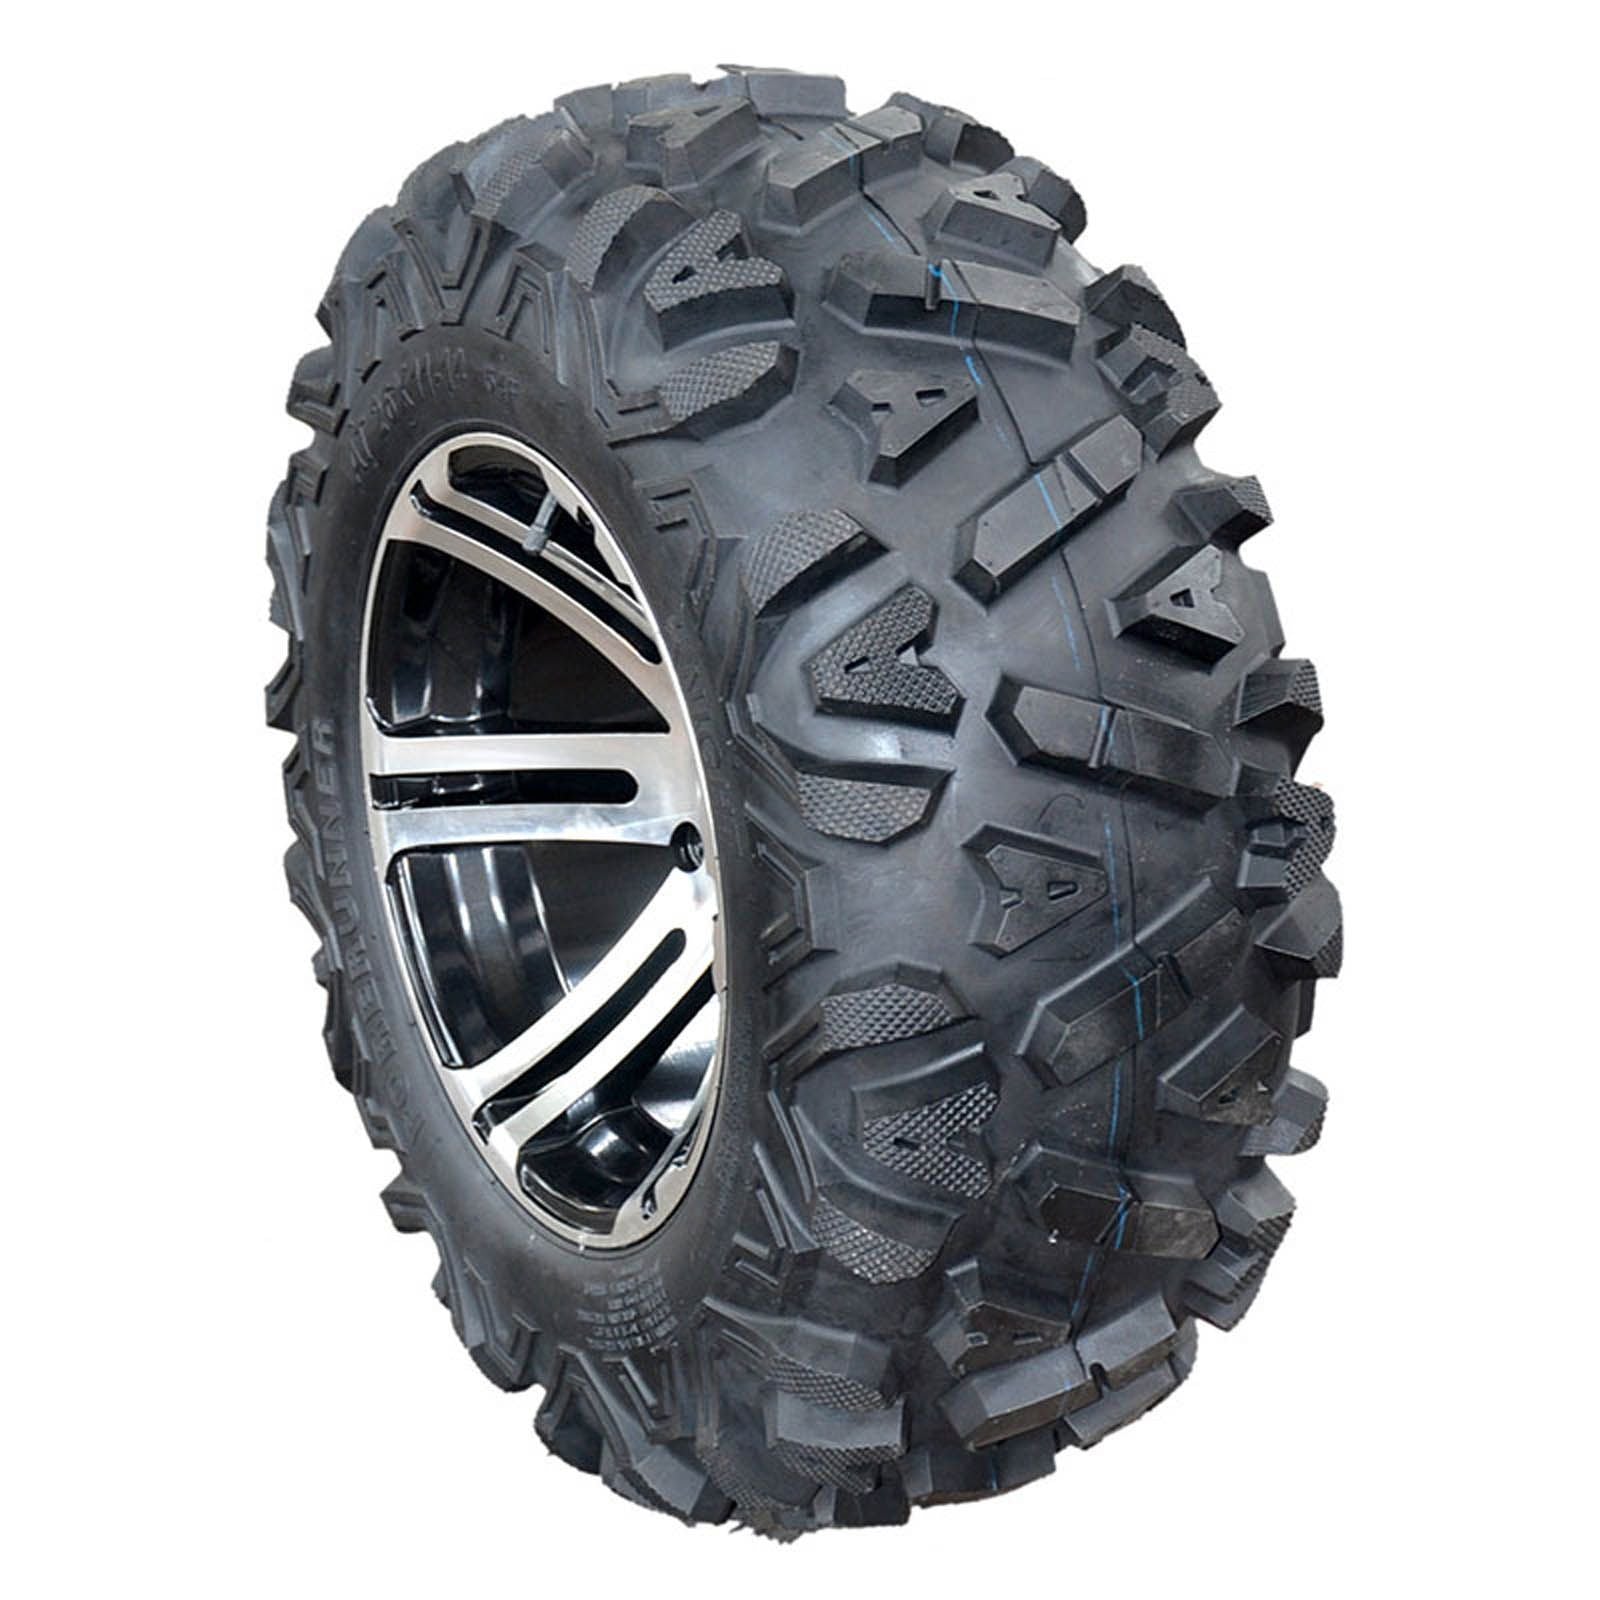 New FOREUNNER ATV Tyre Knight - 25 x 8 x 12 (6PR) #12X25X8KNIGHT